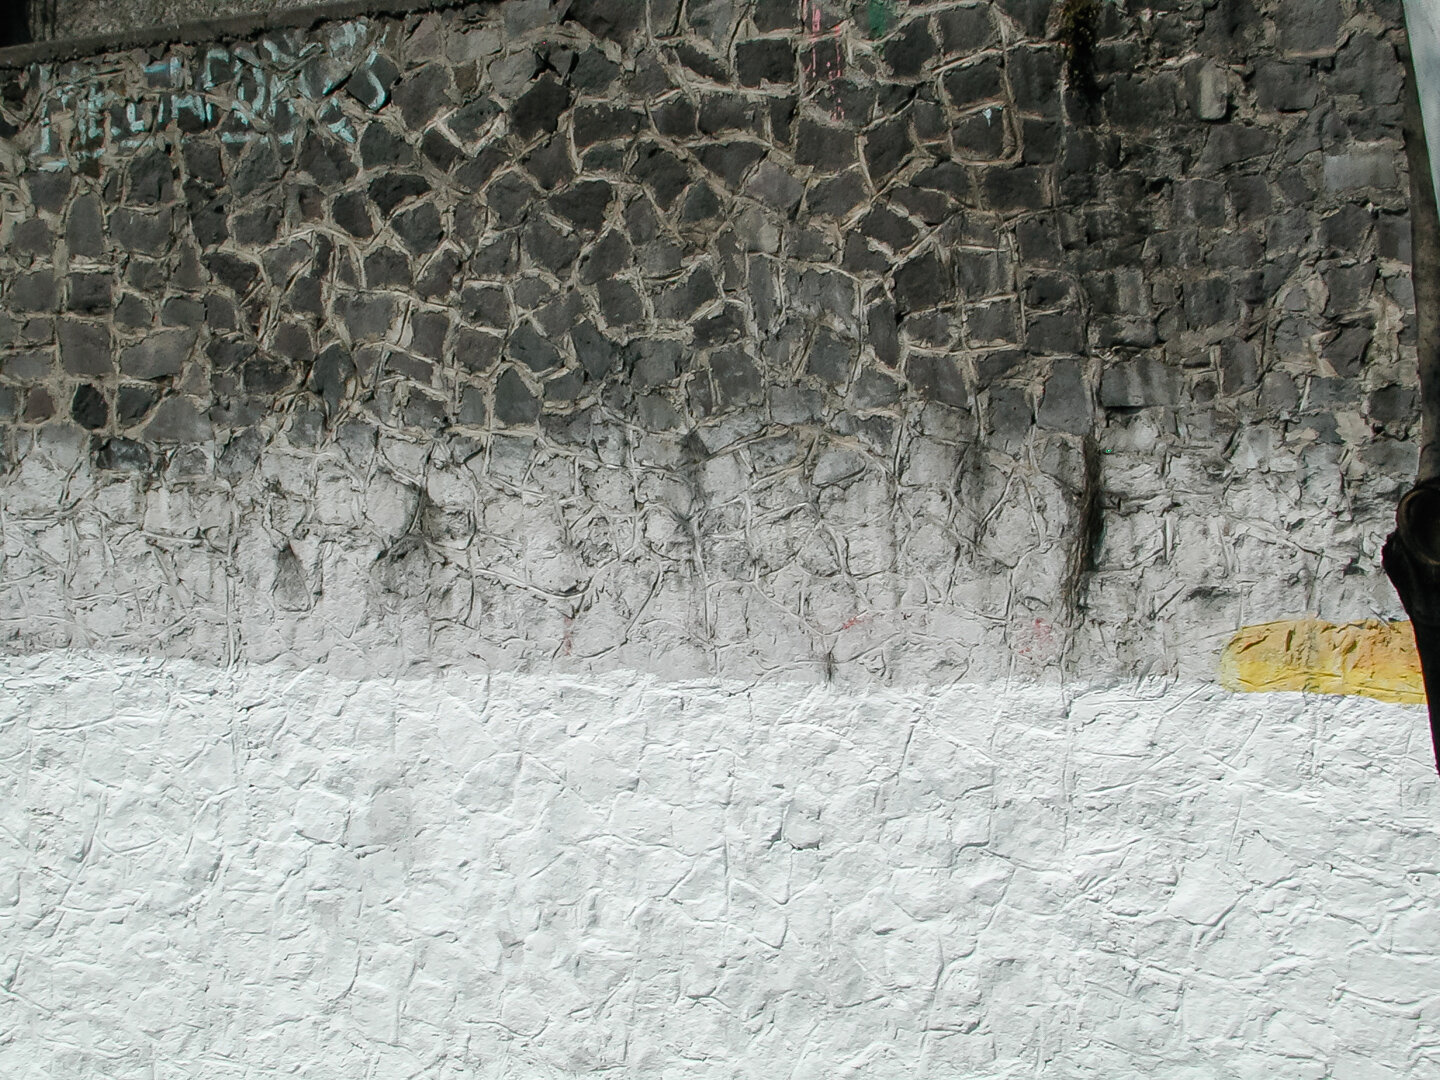 Black & White with Yellow, Mexico City, Mexico 2006